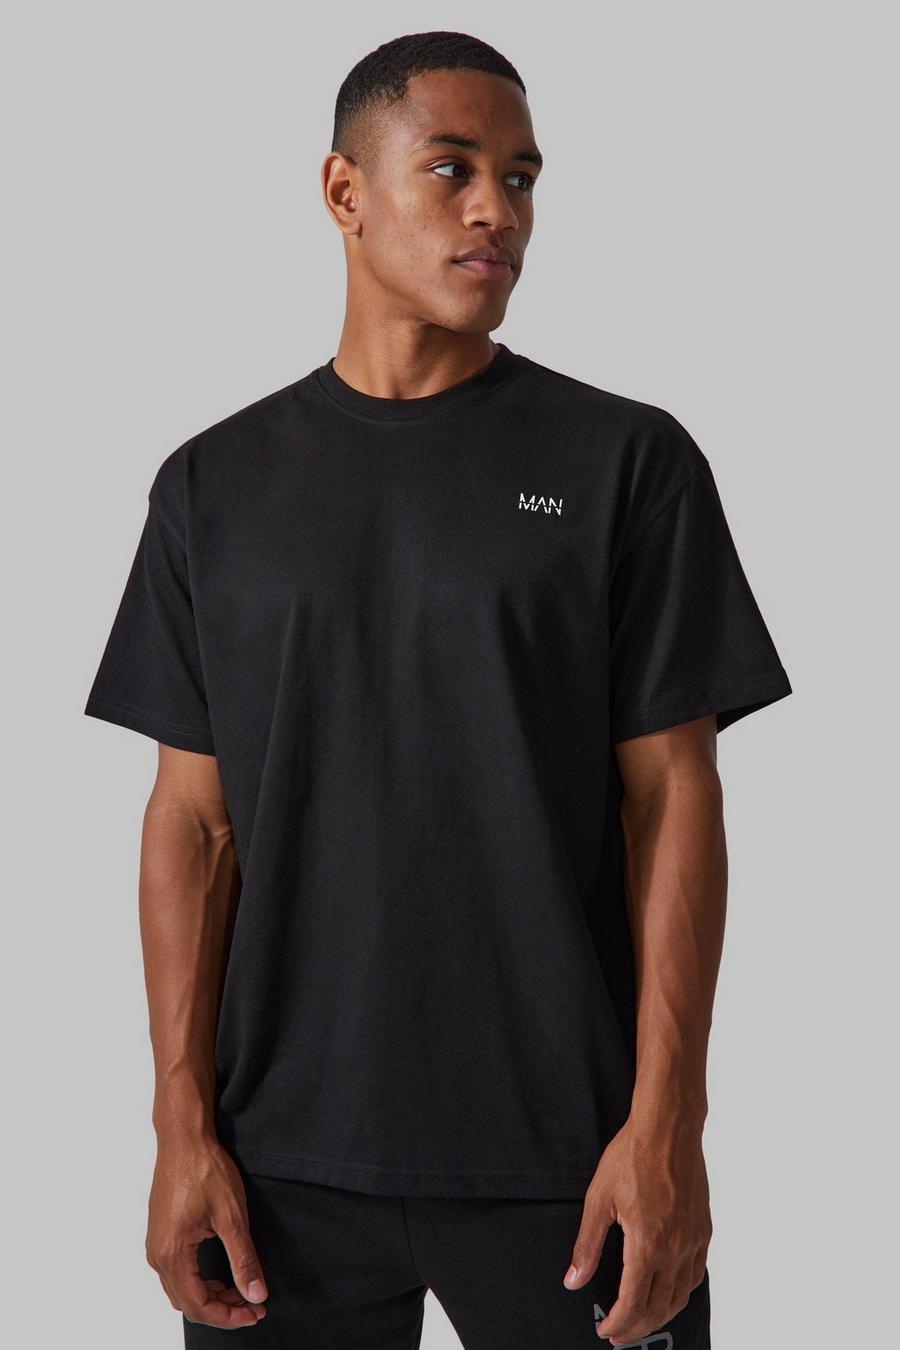 Man Gym T-Shirt, Black